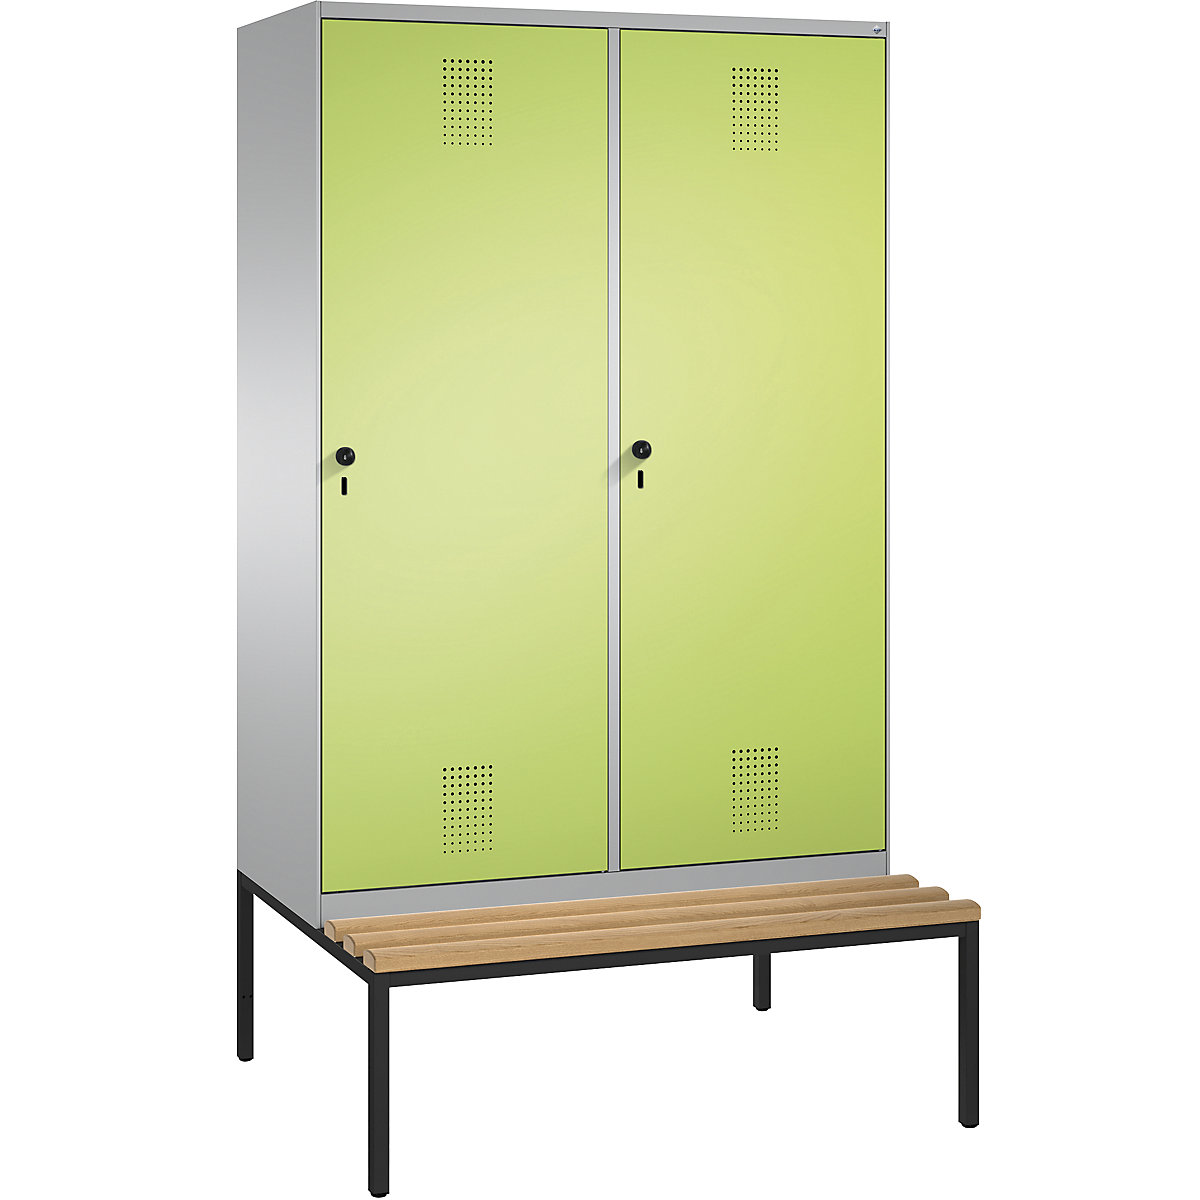 EVOLO cloakroom locker, with bench, door for 2 compartments – C+P, 4 compartments, 2 doors, compartment width 300 mm, white aluminium / viridian green-9